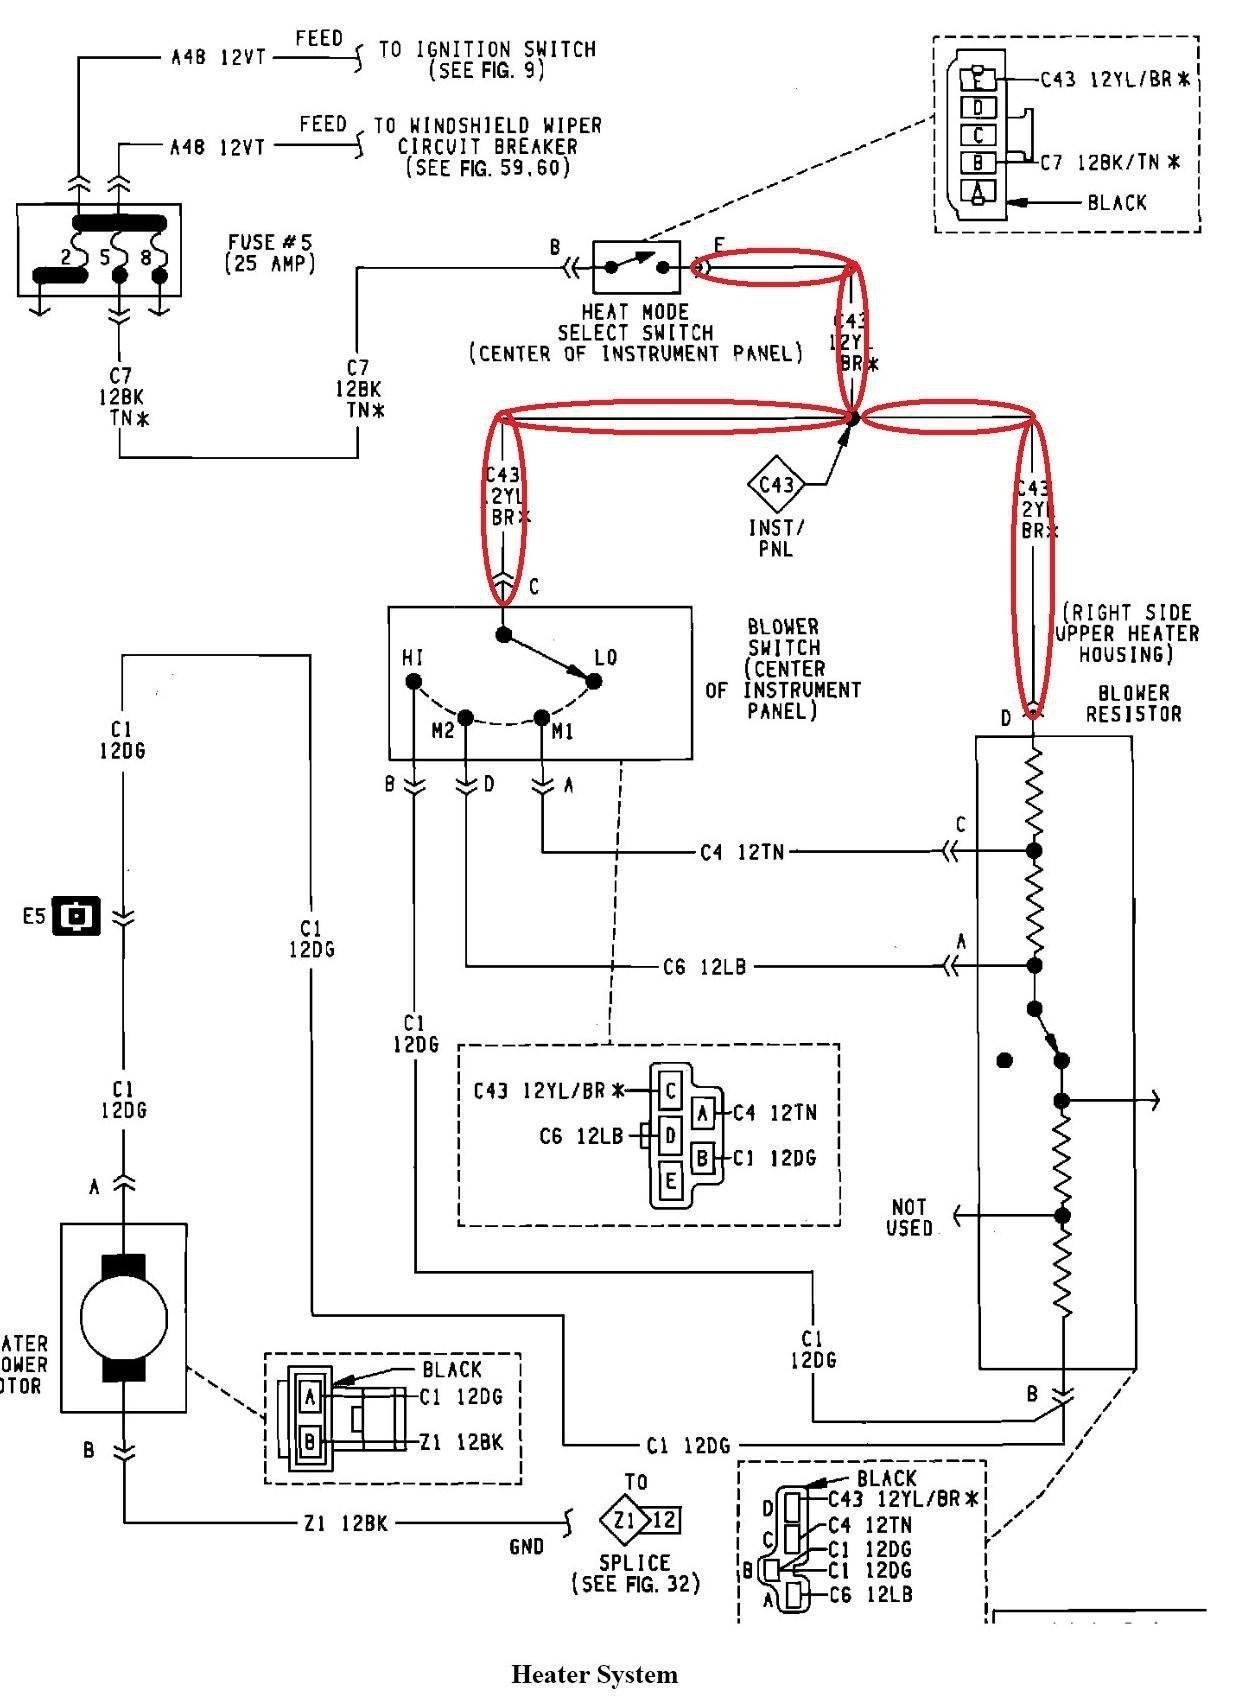 ezgo headlight wiring diagram my wiring diagramezgo wire diagram wiring diagram ezgo headlight wiring diagram source